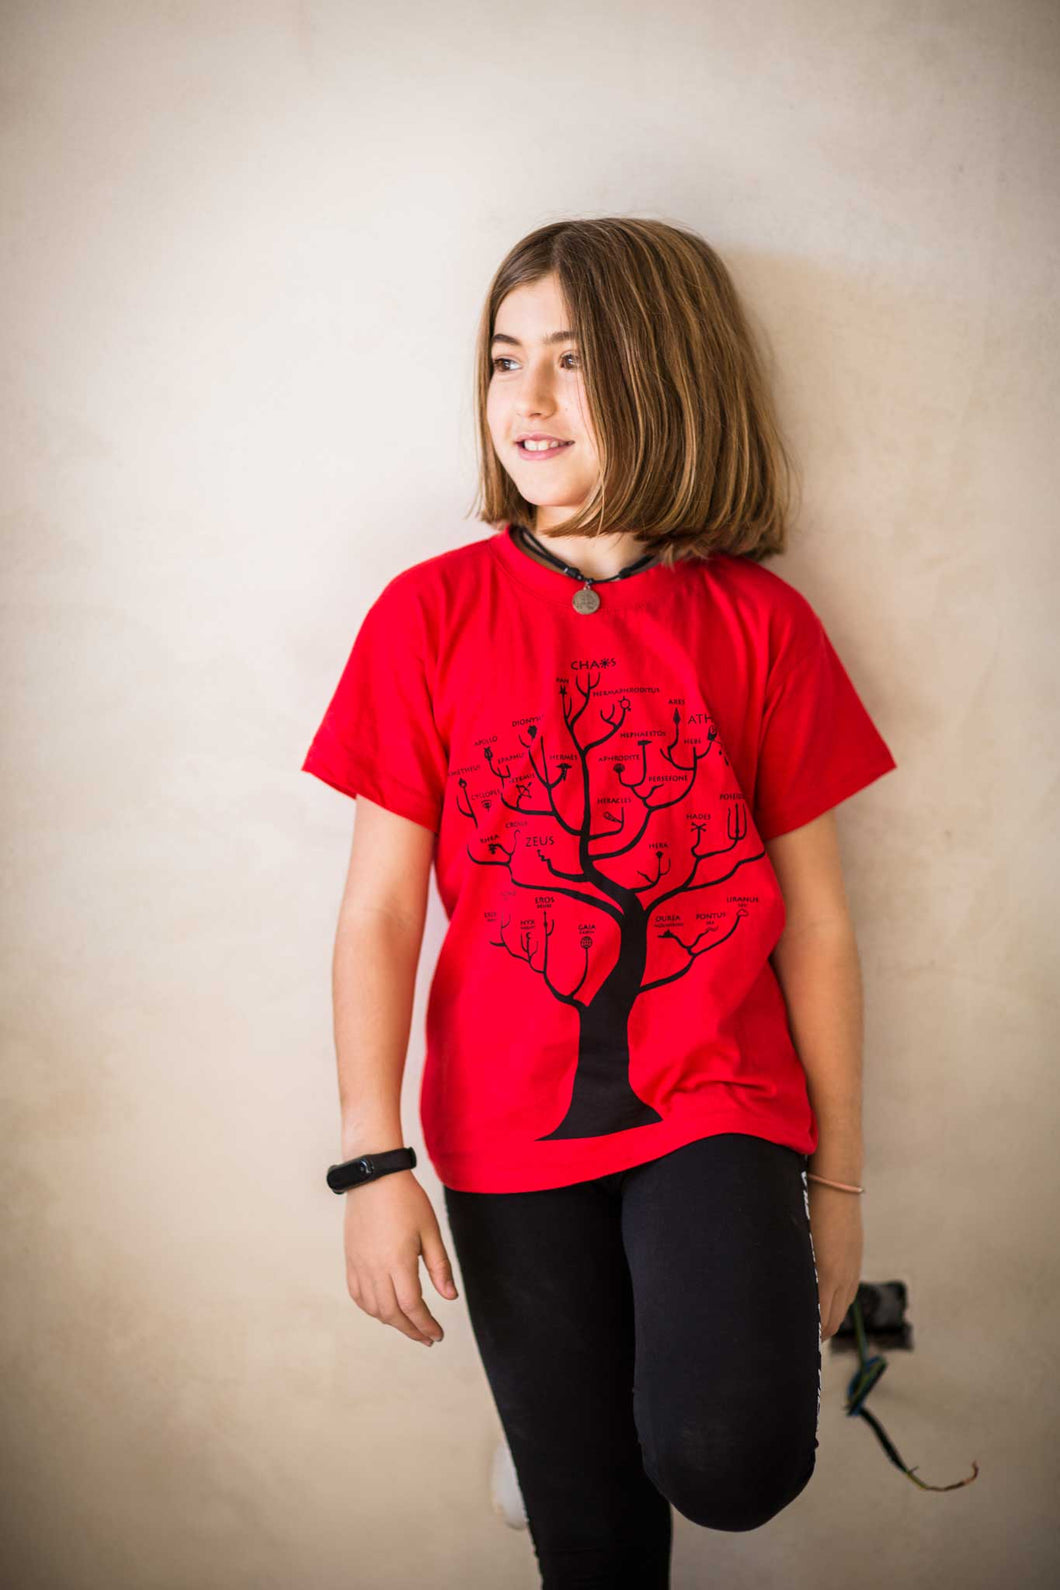 Genealogical Tree of Gods, T-shirt kids